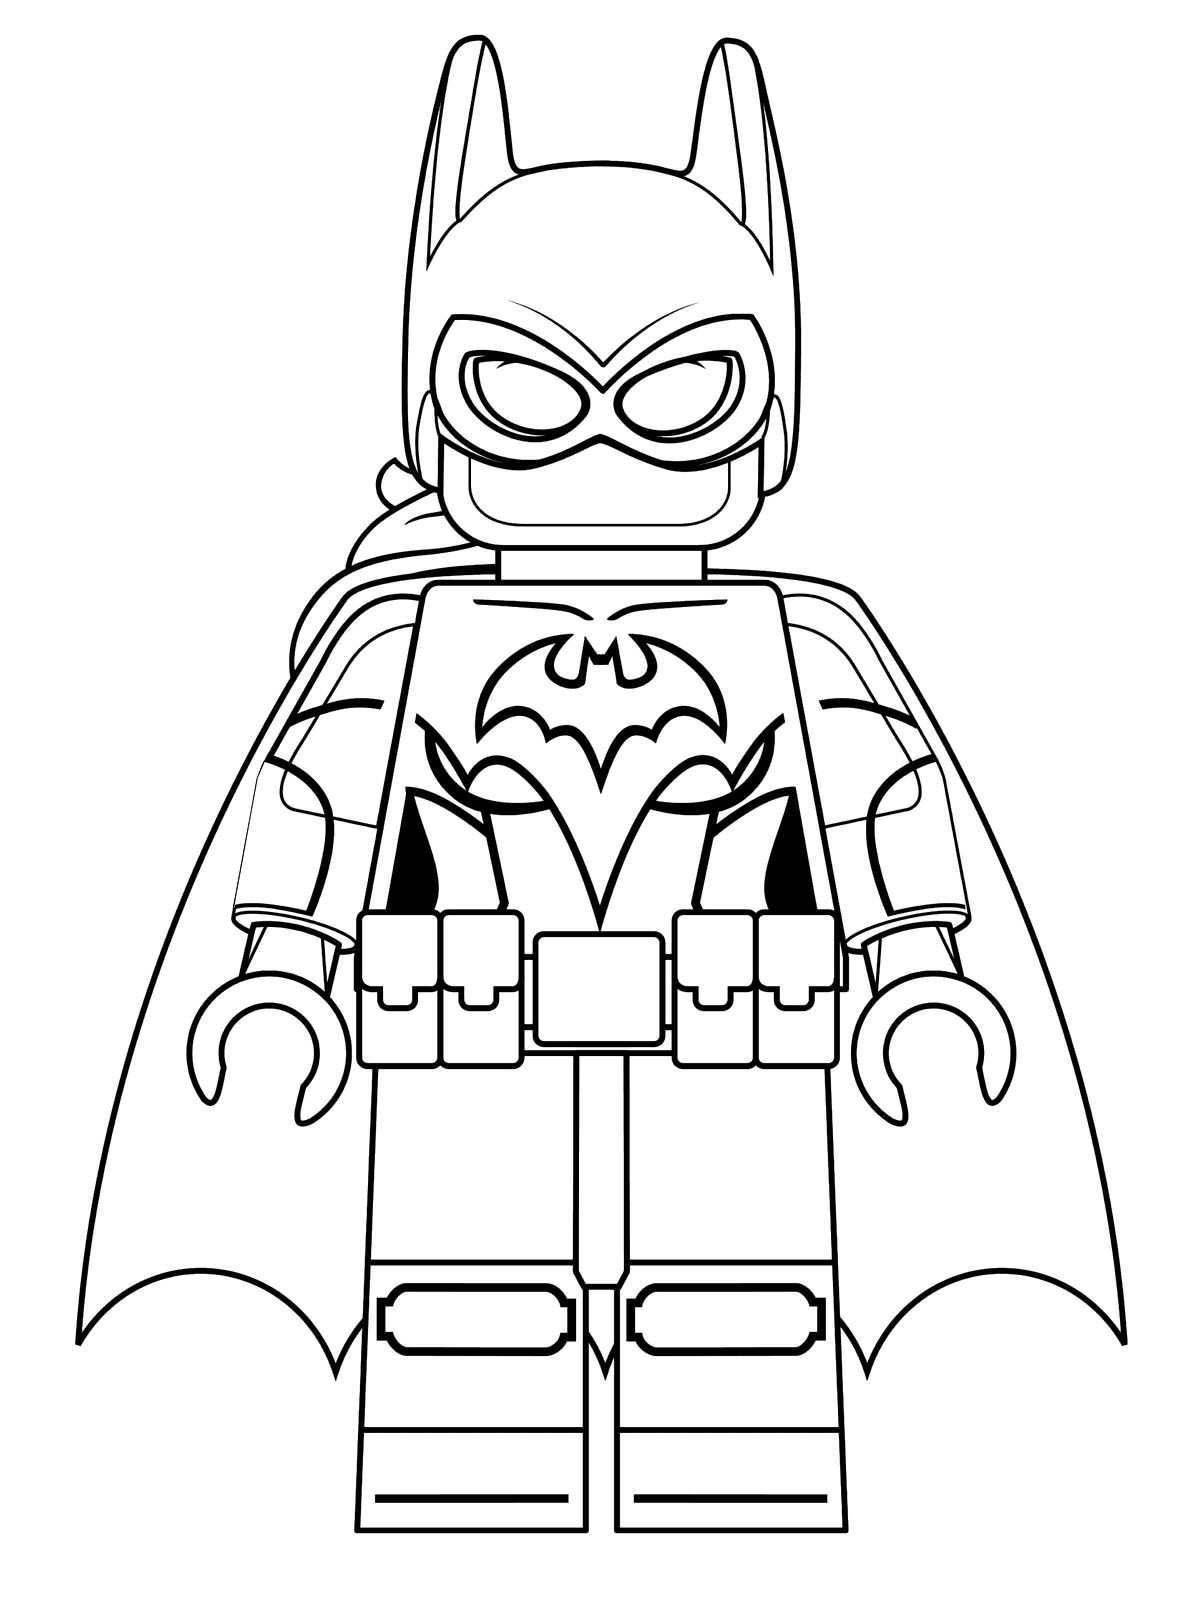 Сказочная страница раскраски lego batman